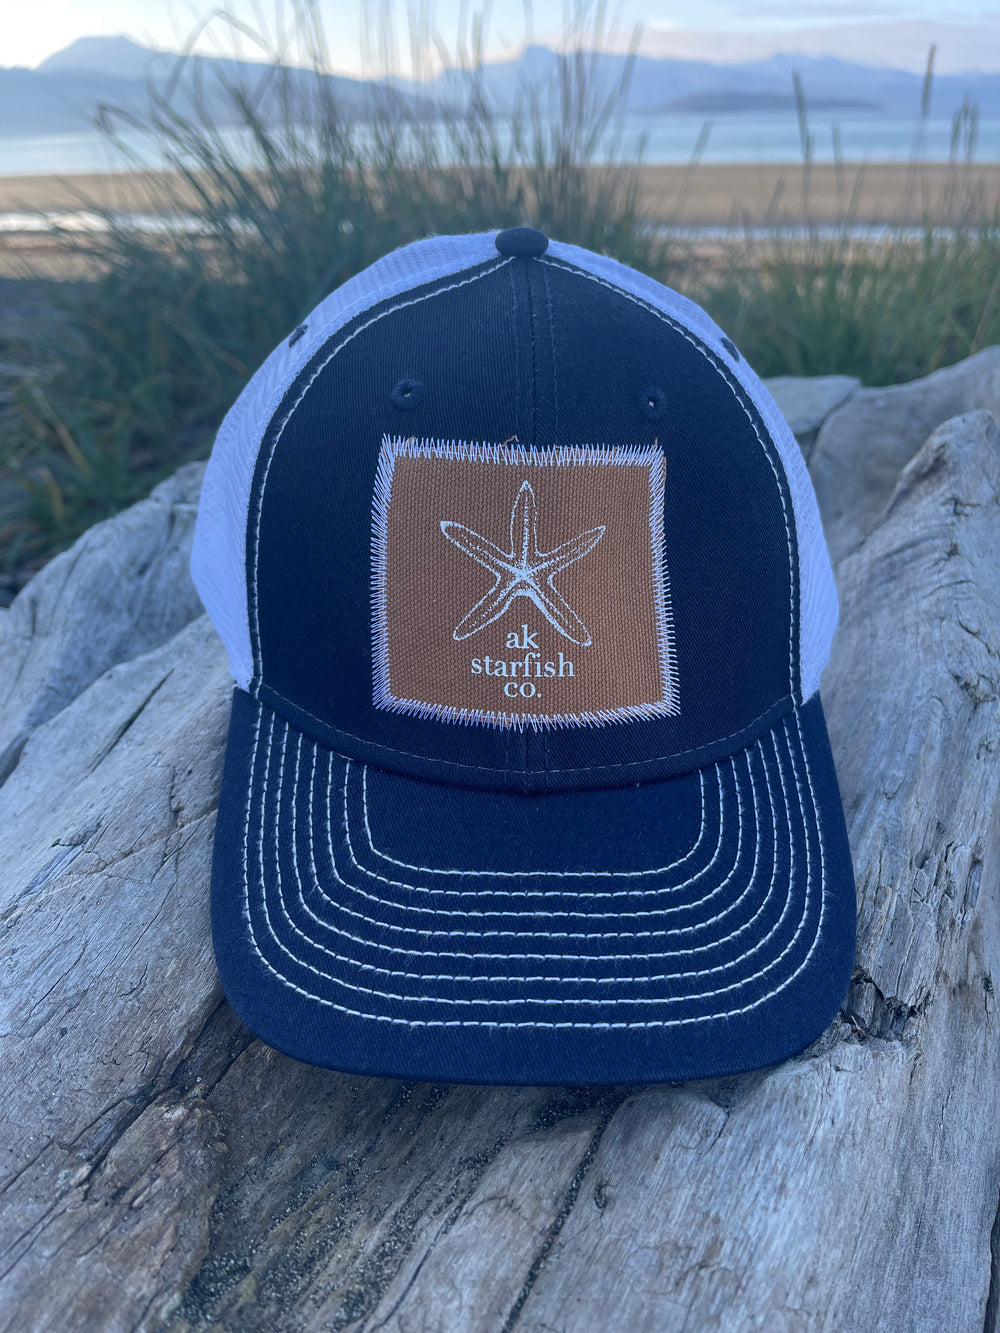 Midnight / White AK Starfish Co. Patch Hat. $38.00